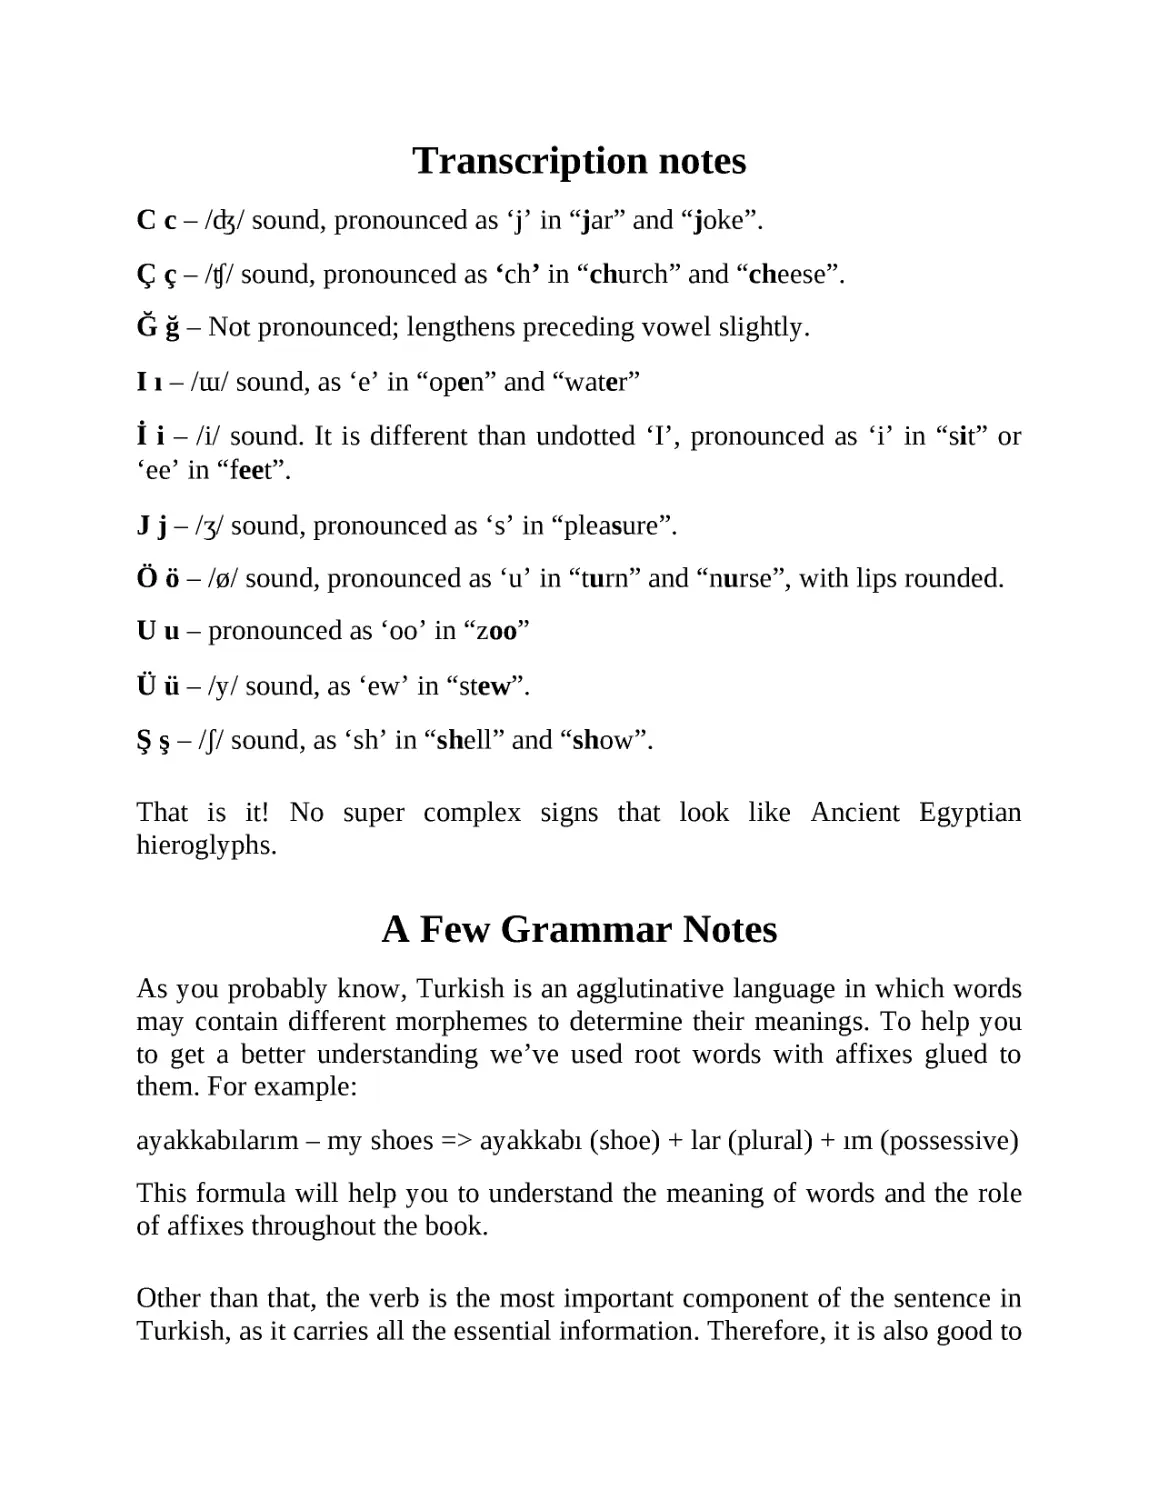 ﻿Transcription note
﻿A Few Grammar Note